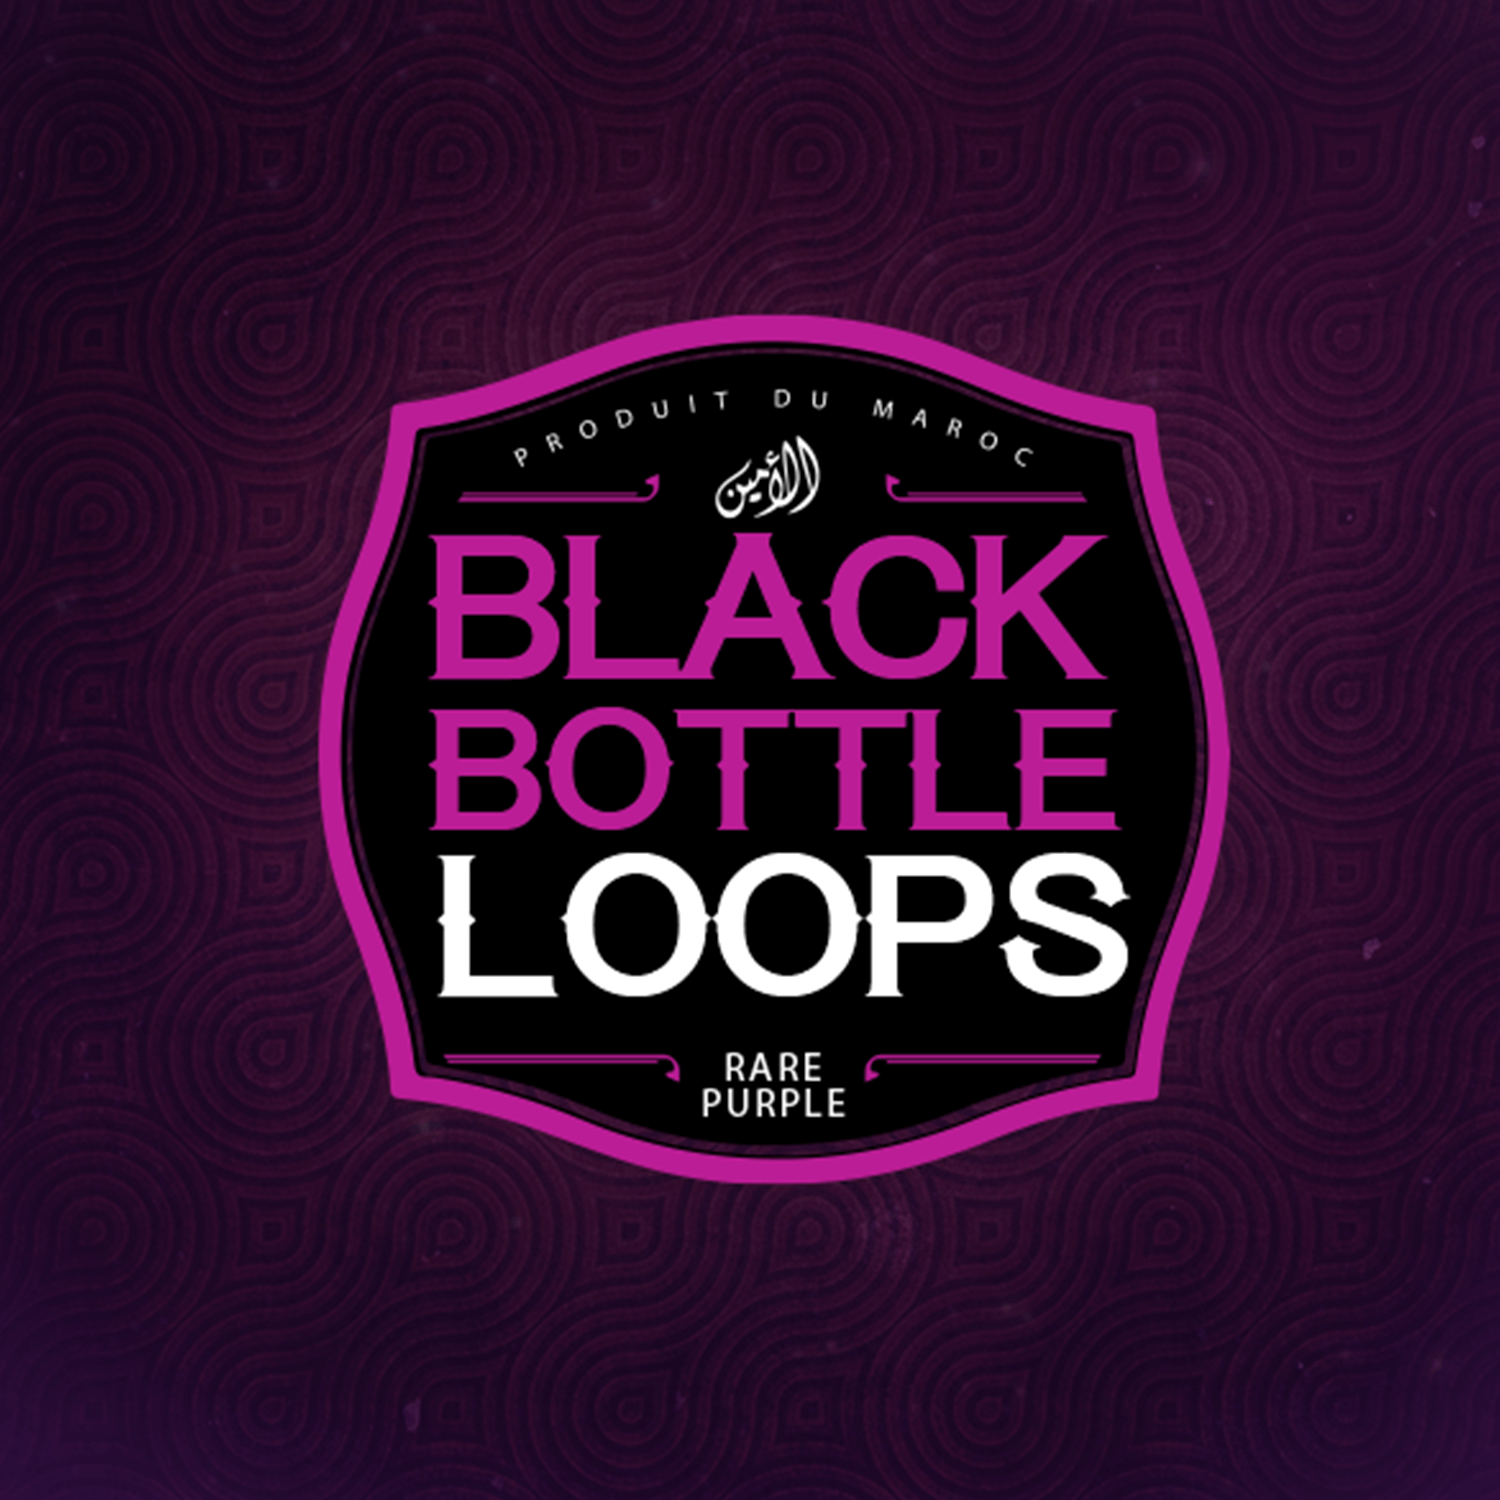 Black Bottle Loops